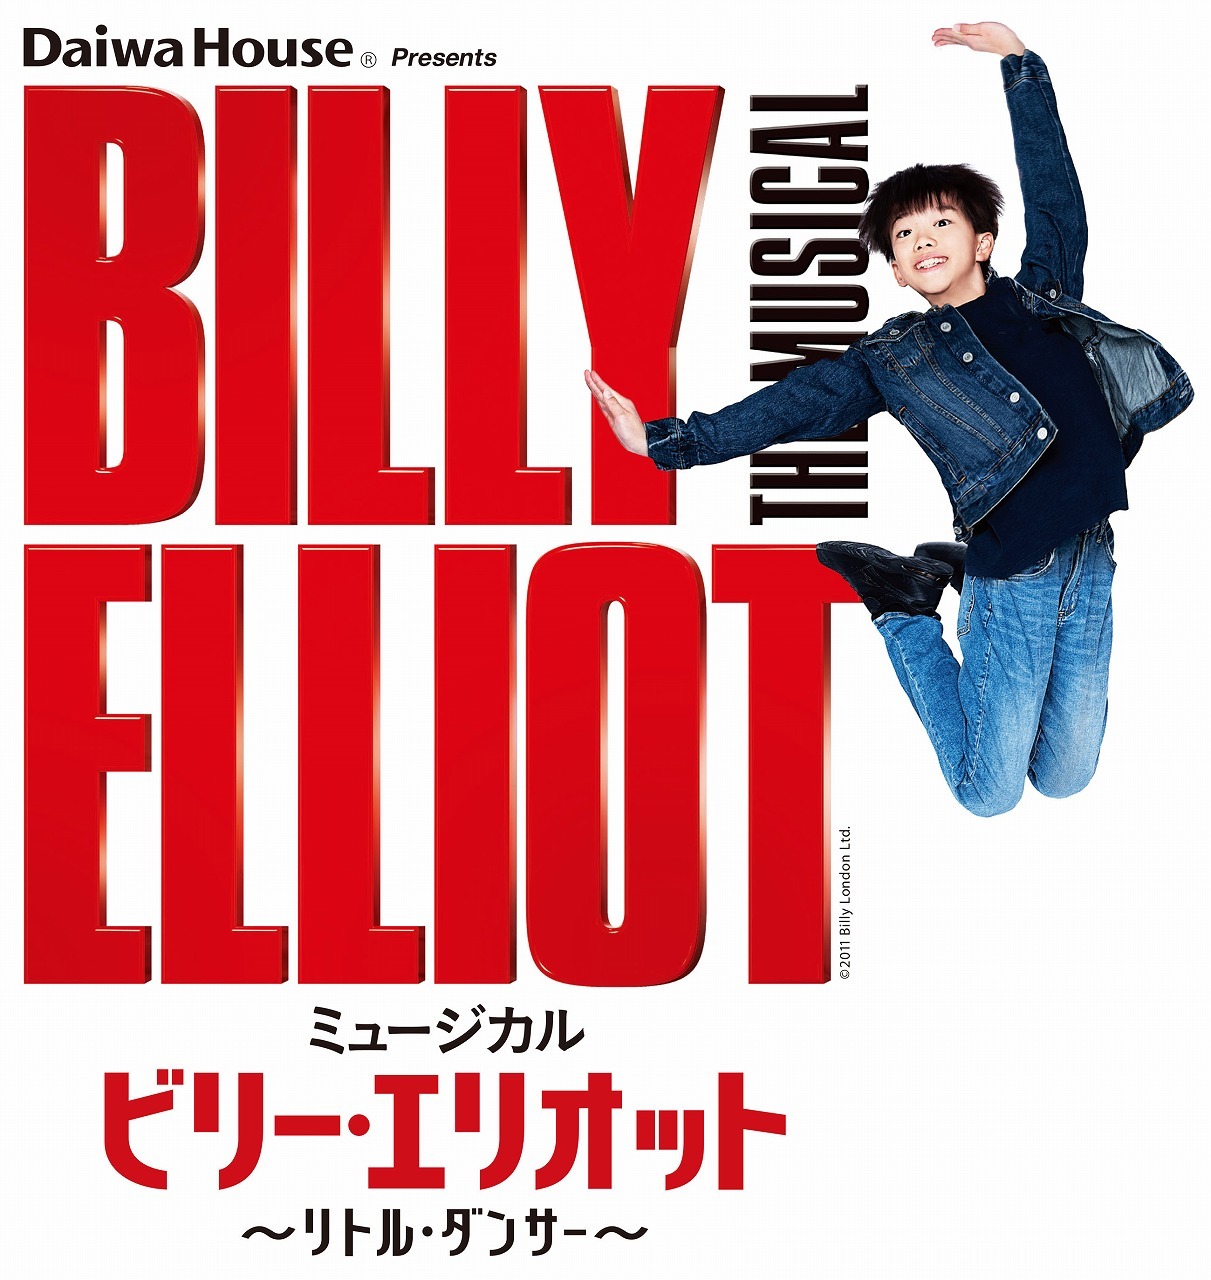 Daiwa House presents ミュージカル『ビリー・エリオット 〜リトル・ダンサー〜』